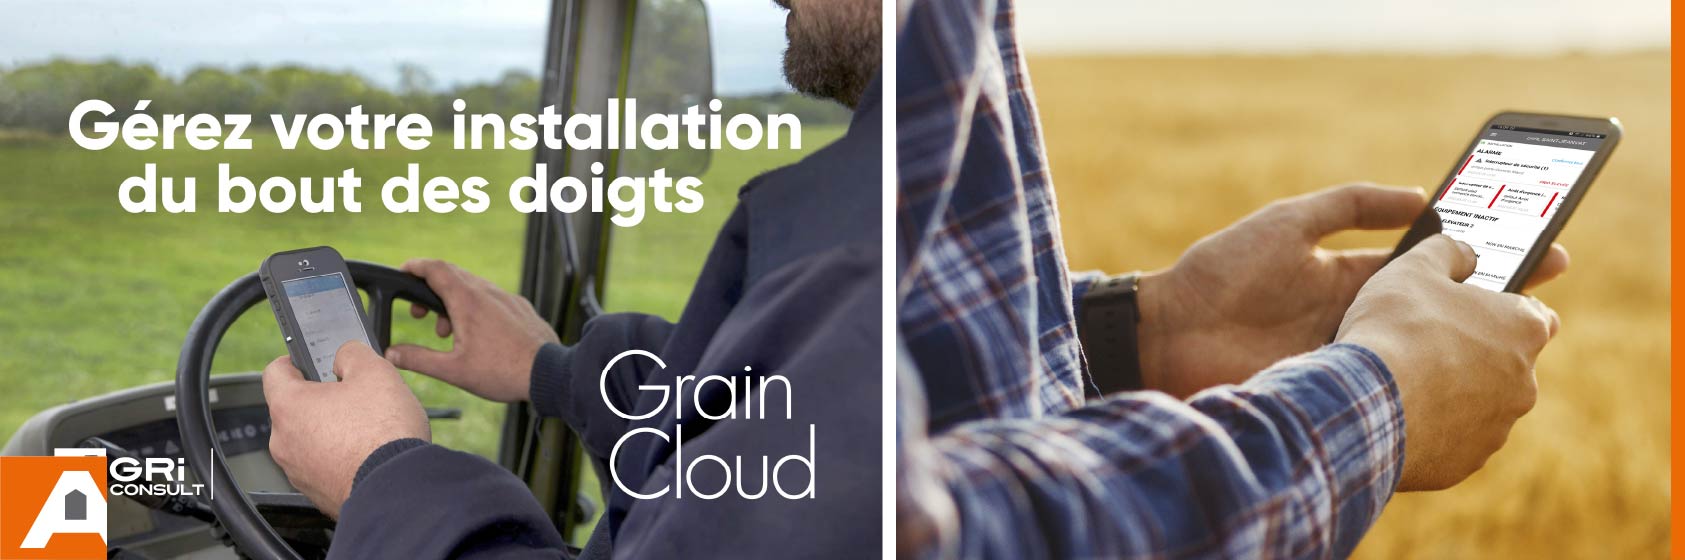 header GrainCloud visuel agriconsult